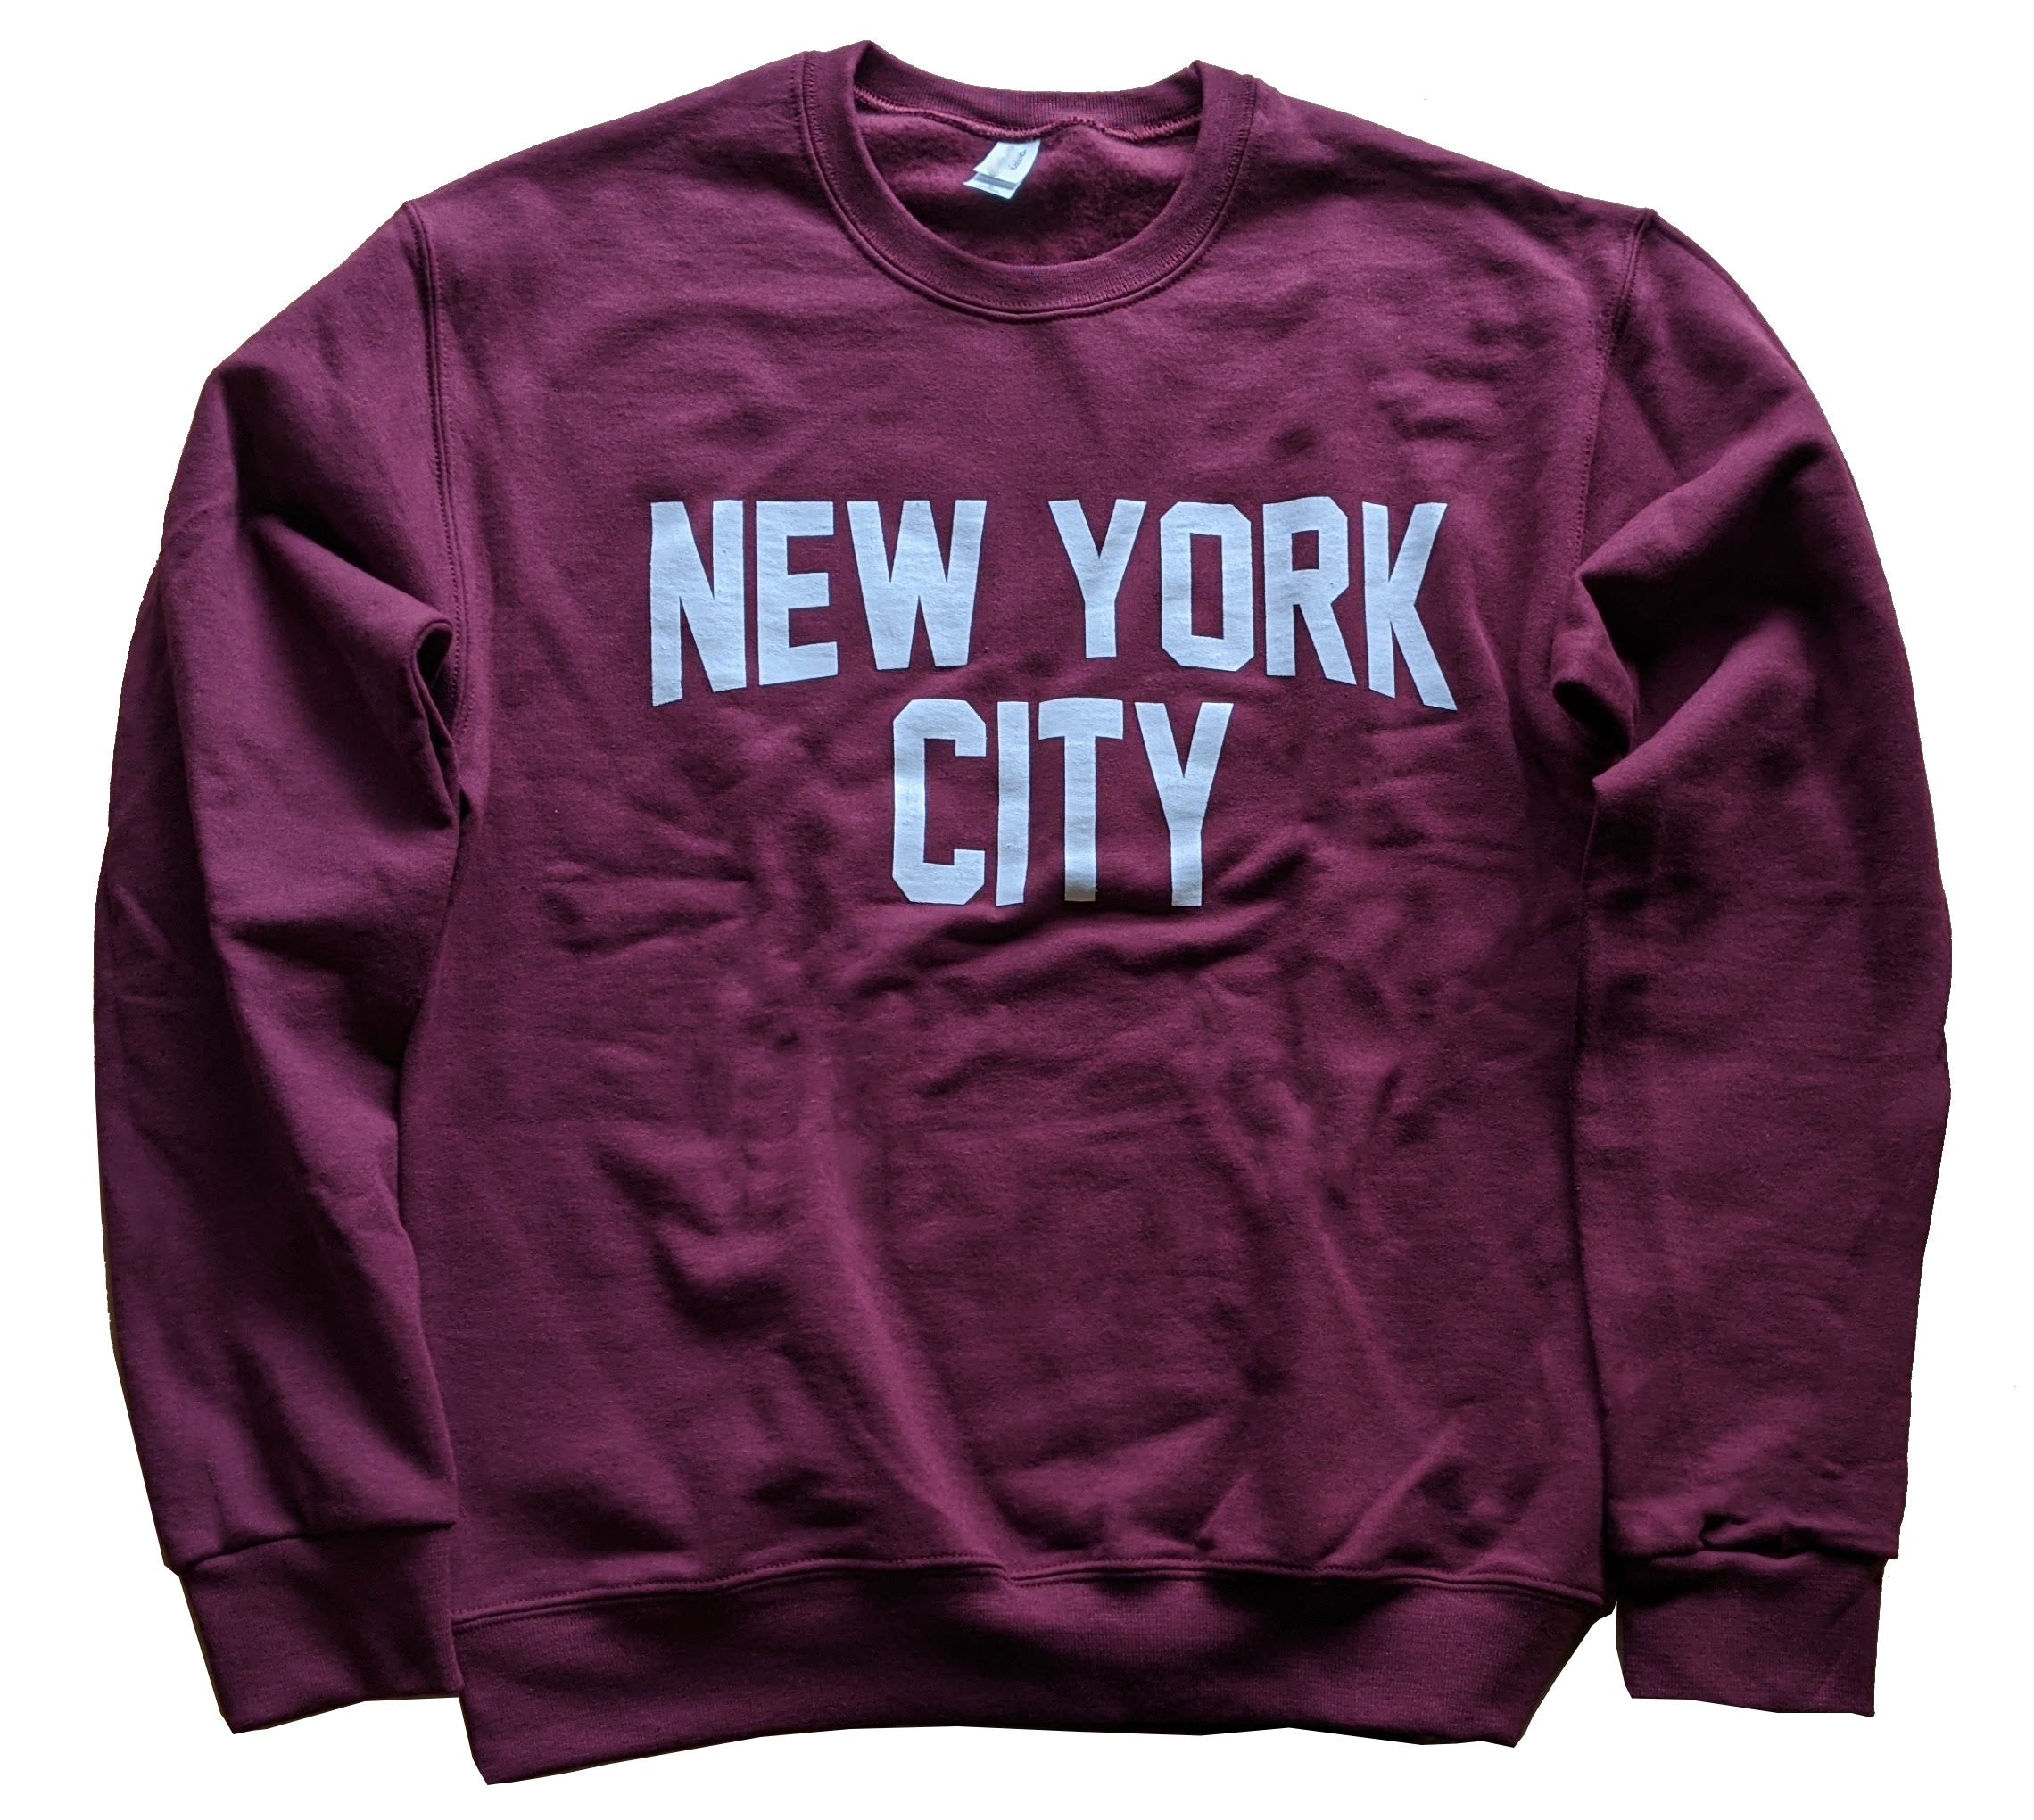 Adult Unisex New York City Crewneck Sweatshirt Maroon